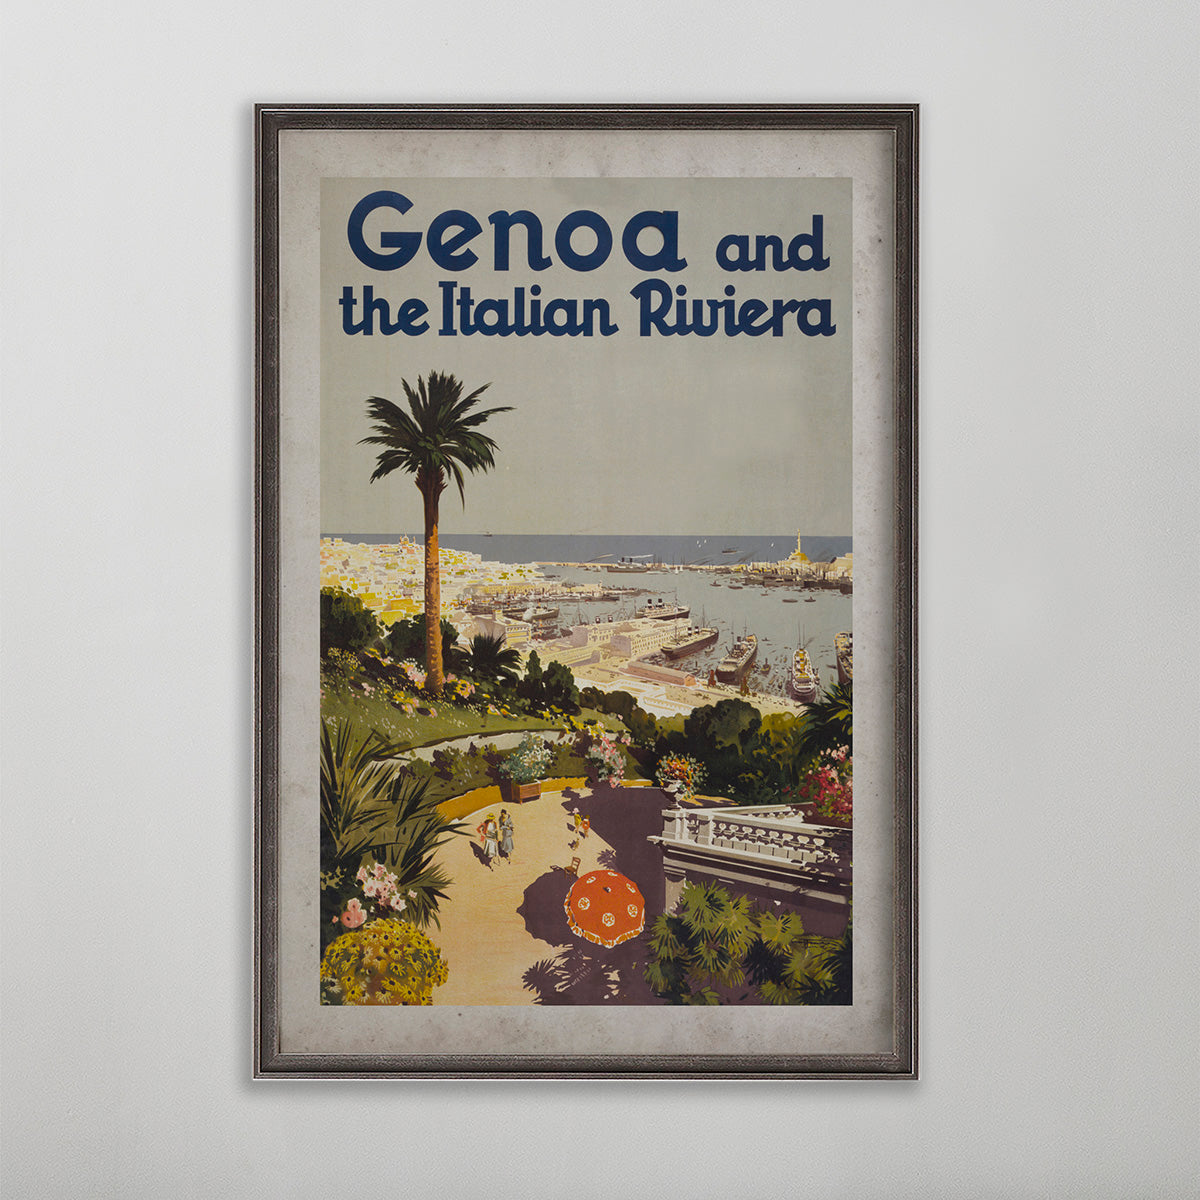 Genoa and the Italian Rivera vintage travel poster. 